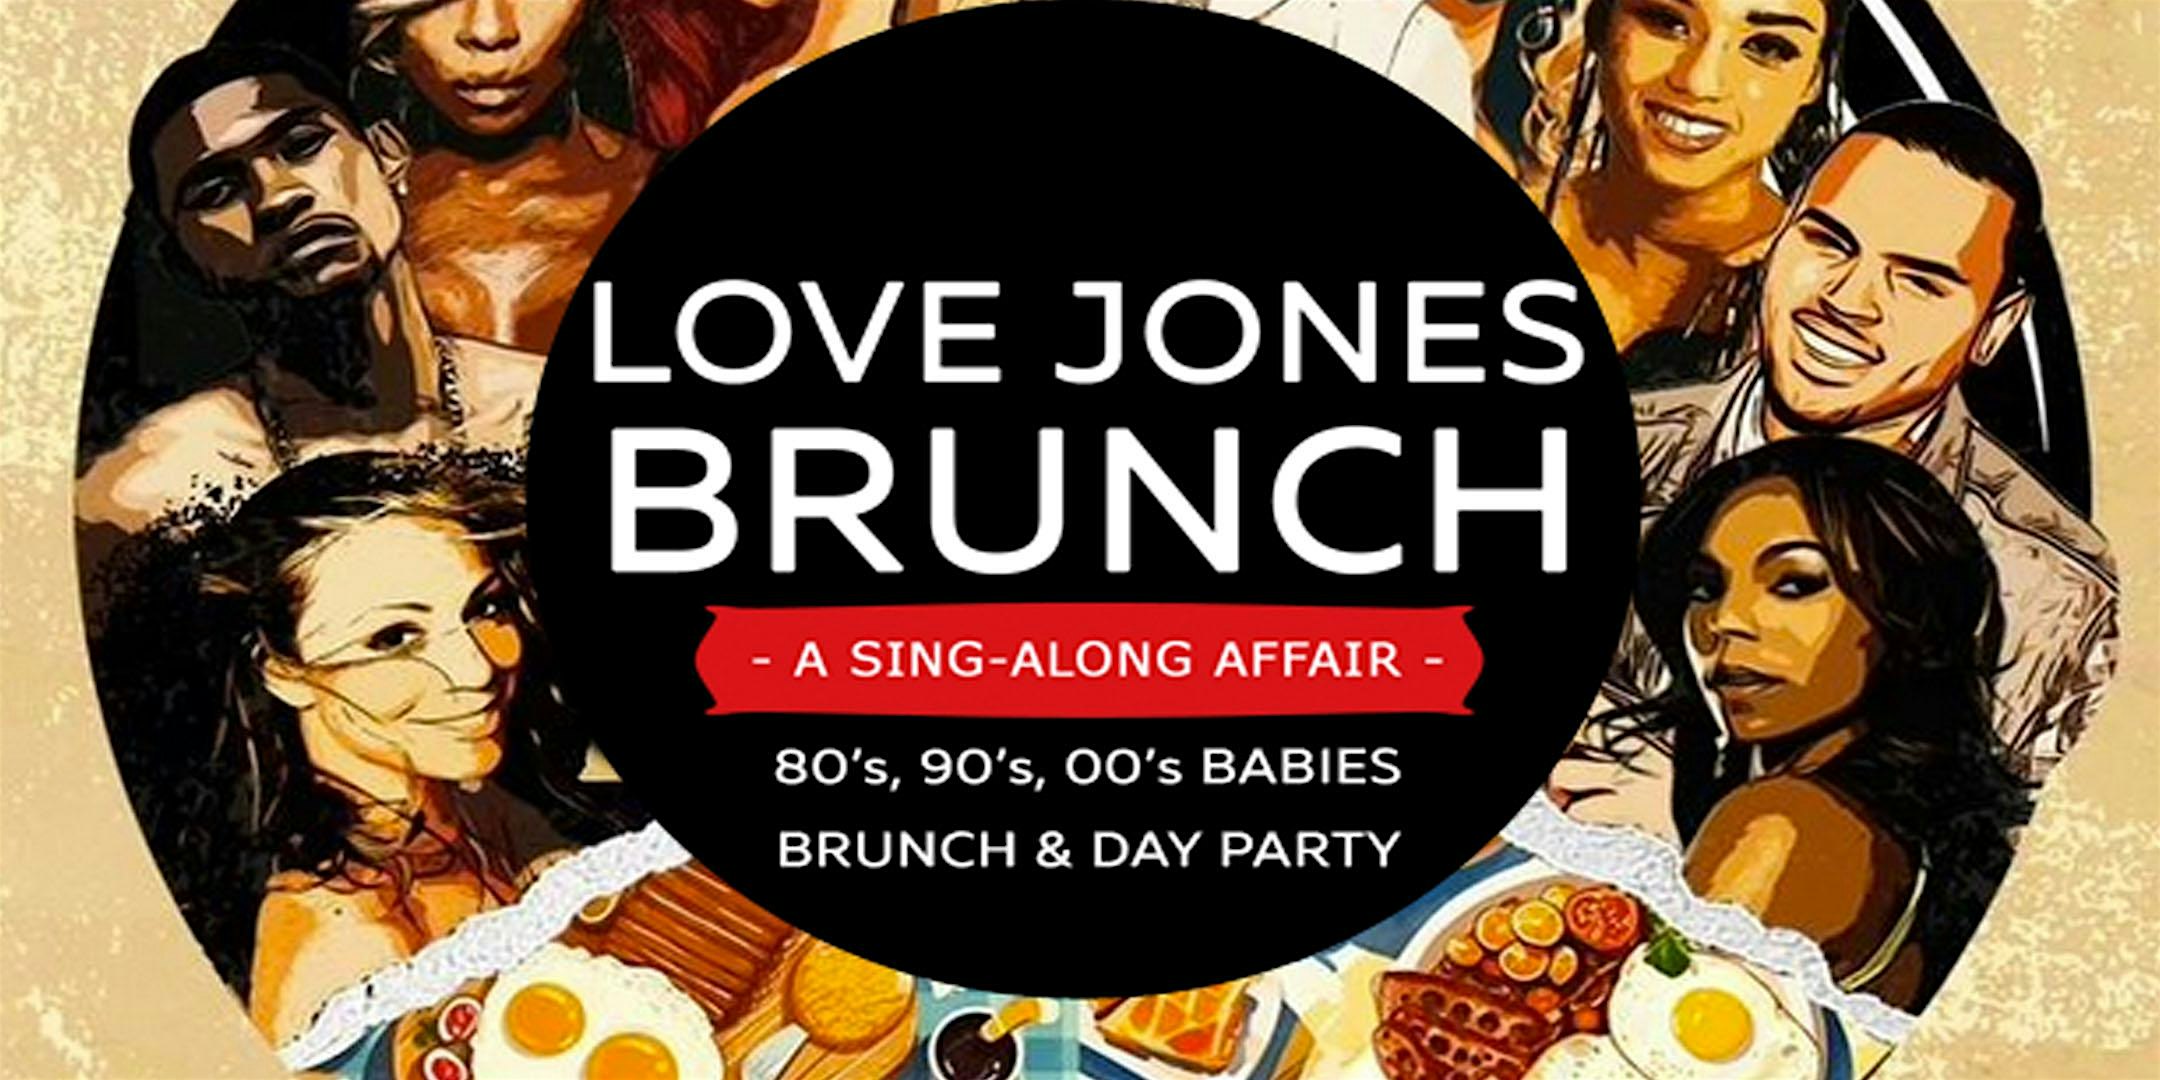 LOVE JONES BRUNCH - A SING A LONG AFFAIR - 80'S, 90'S, 00'S BABY PARTY